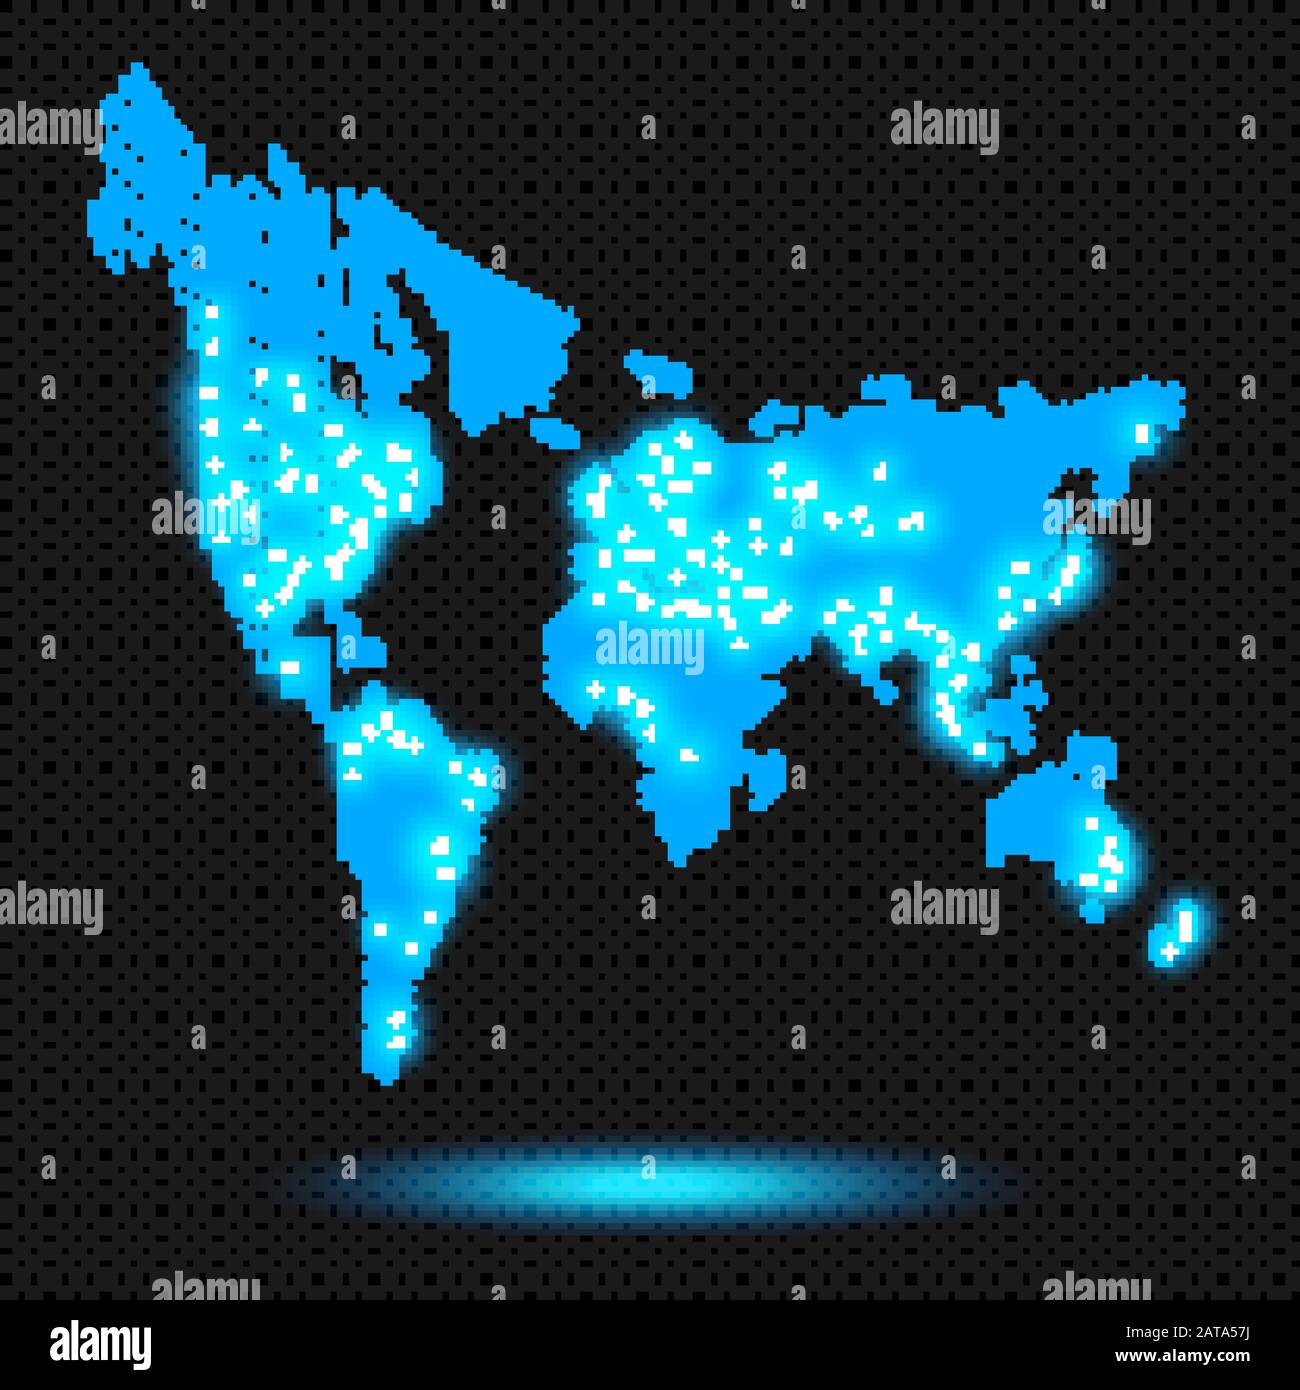 Blue Shining Earth Map Logo auf transparentem Hintergrund - Vektor-Glowing Neon World Map Fisheye Lens Distortion Effect Stock Vektor